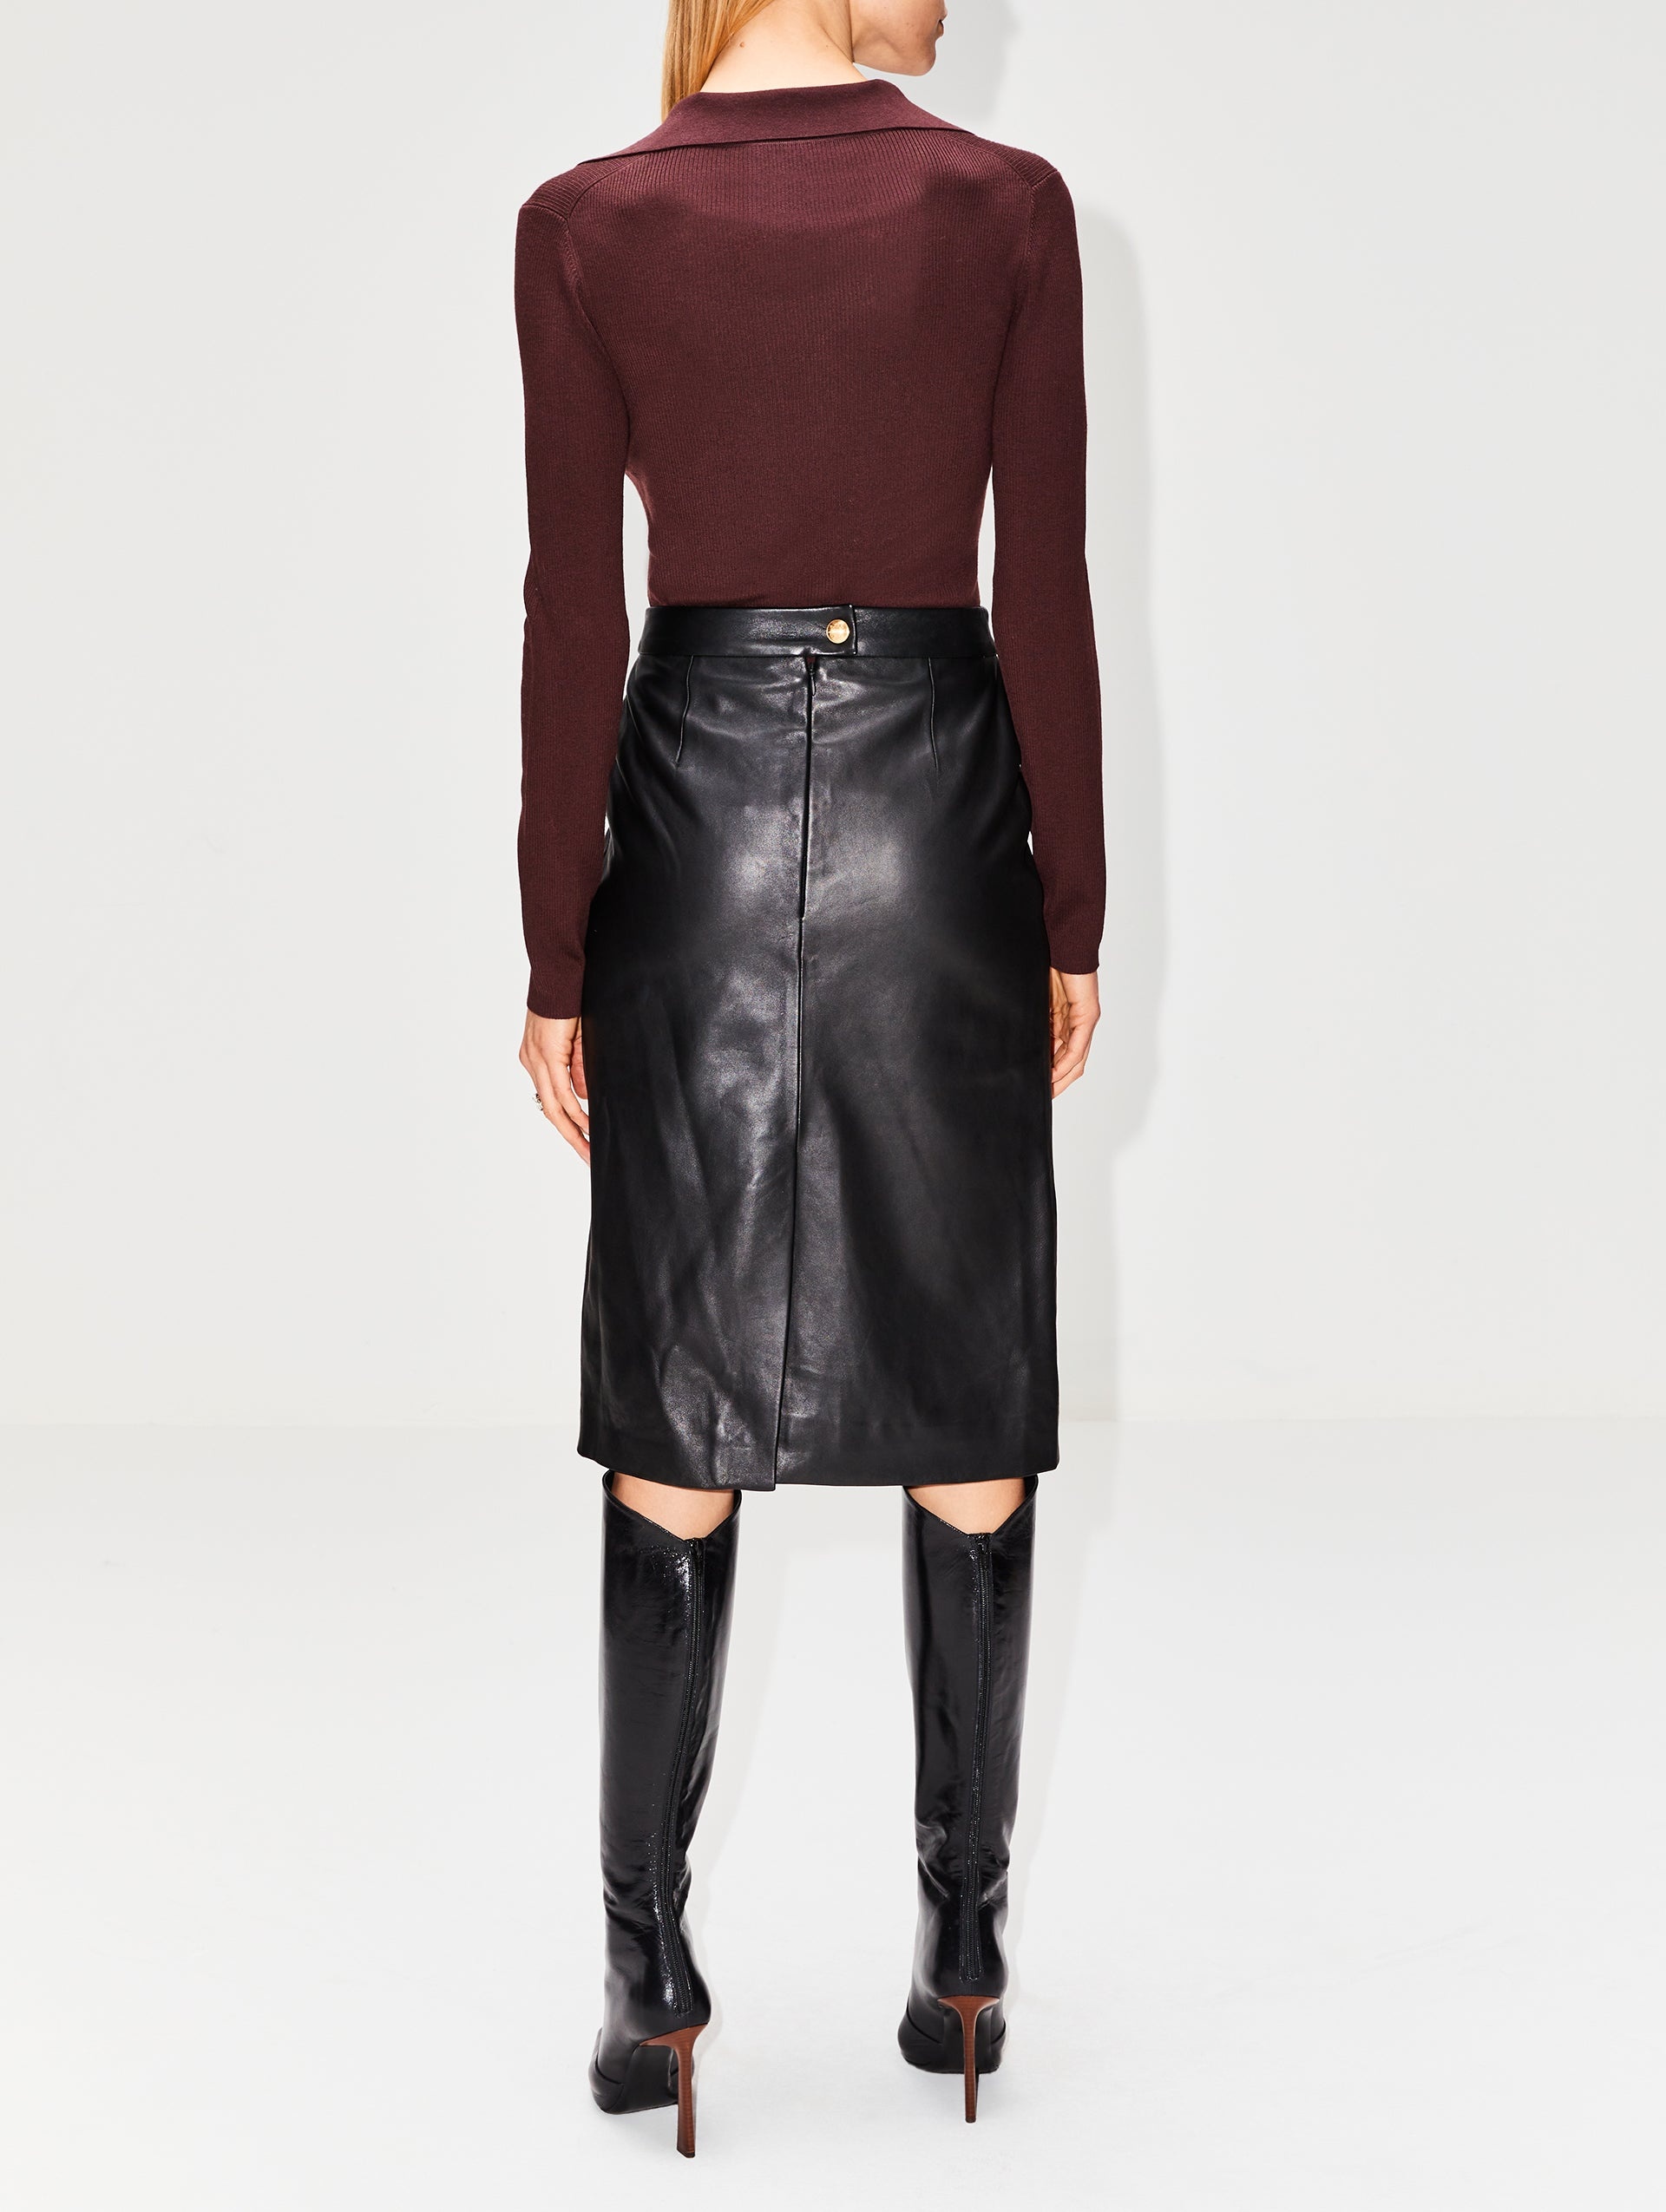 Leonie Leather Skirt - 3